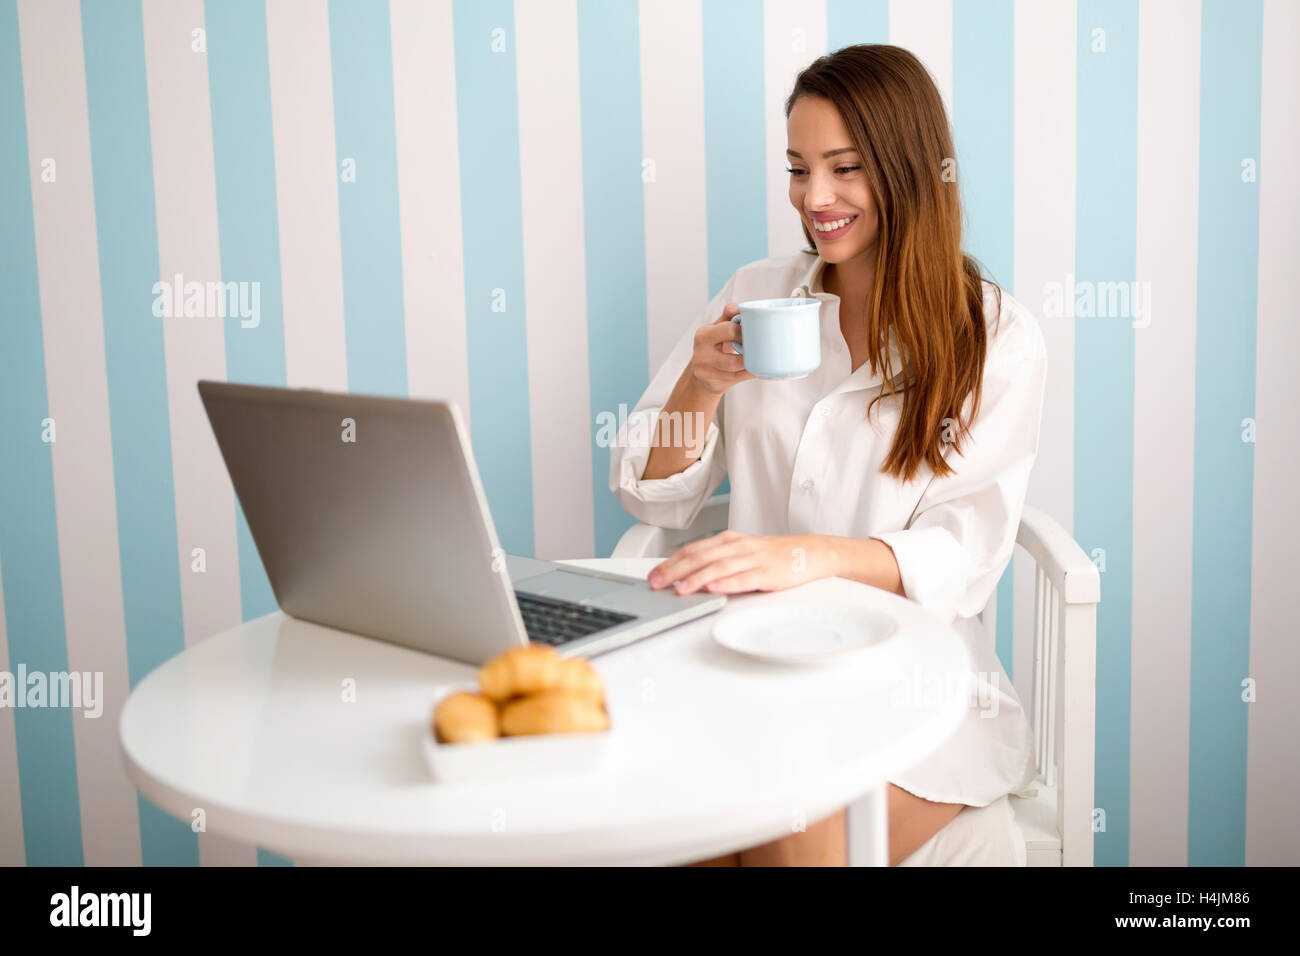 Beautiful woman reading news and drinking coffee Stock Photo